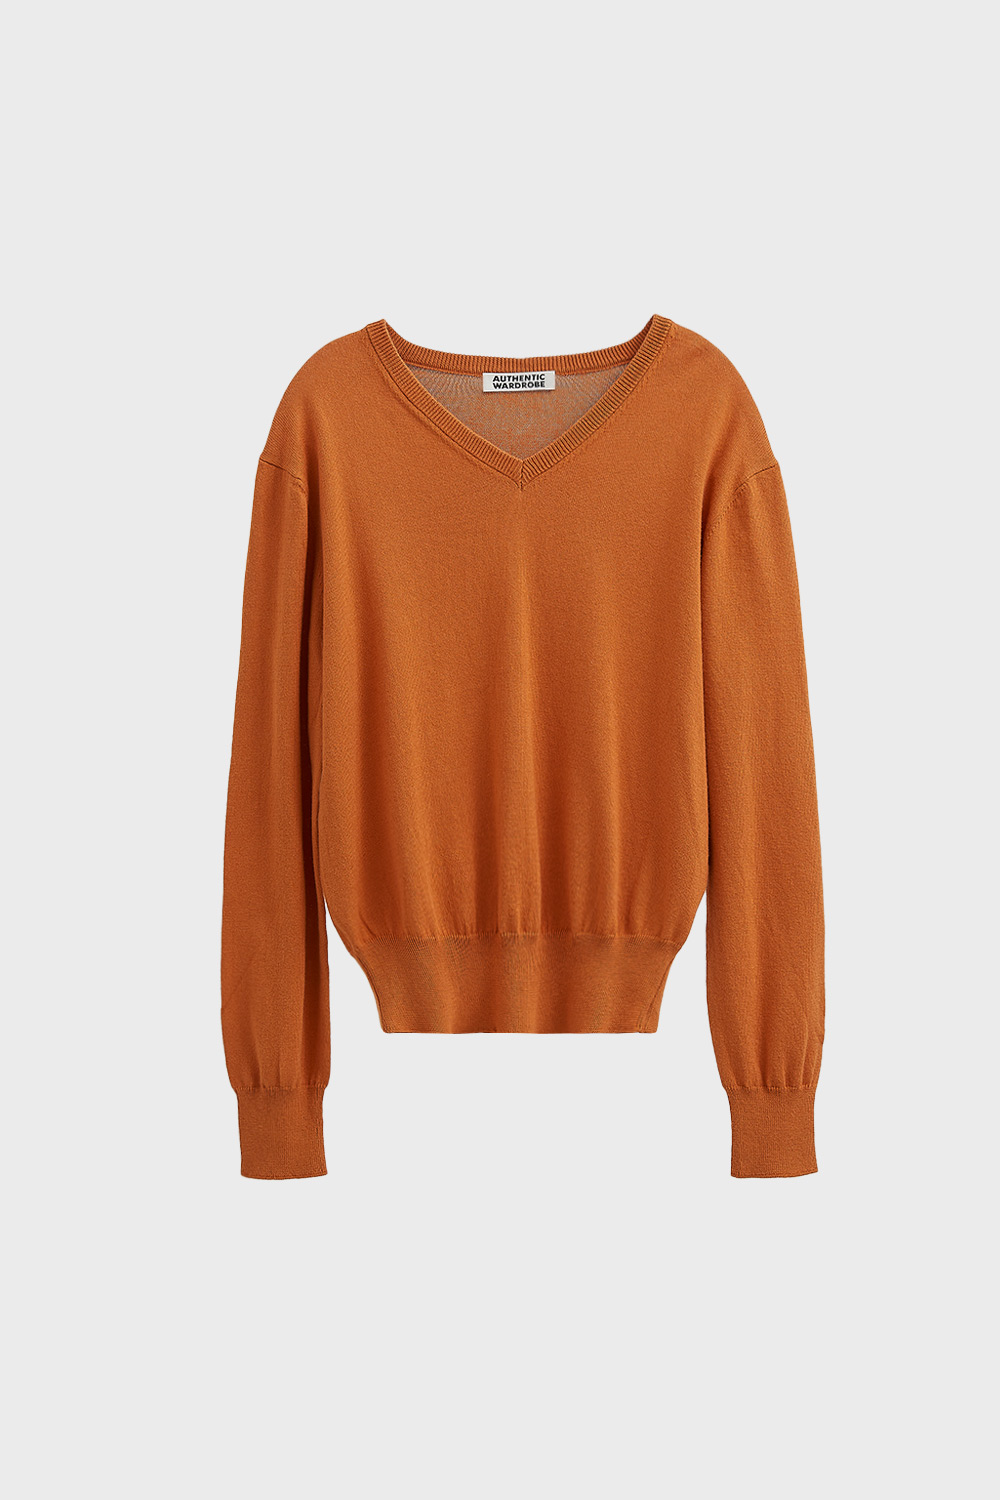 Basic color knit sweater(orange)